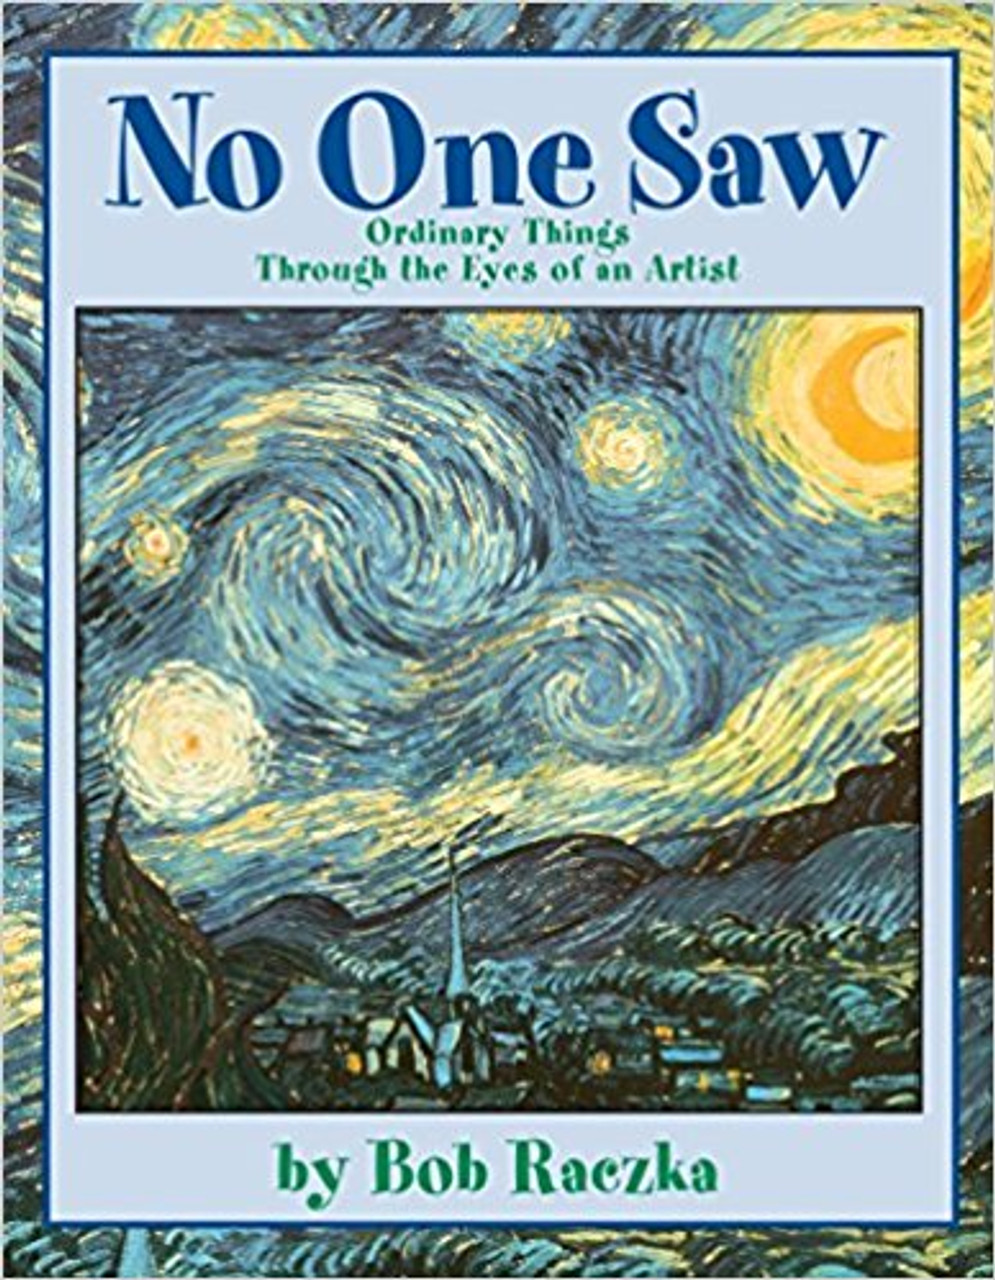 No One Saw: Ordinary Things Through the Eyes of an Artist by Bob Raczka